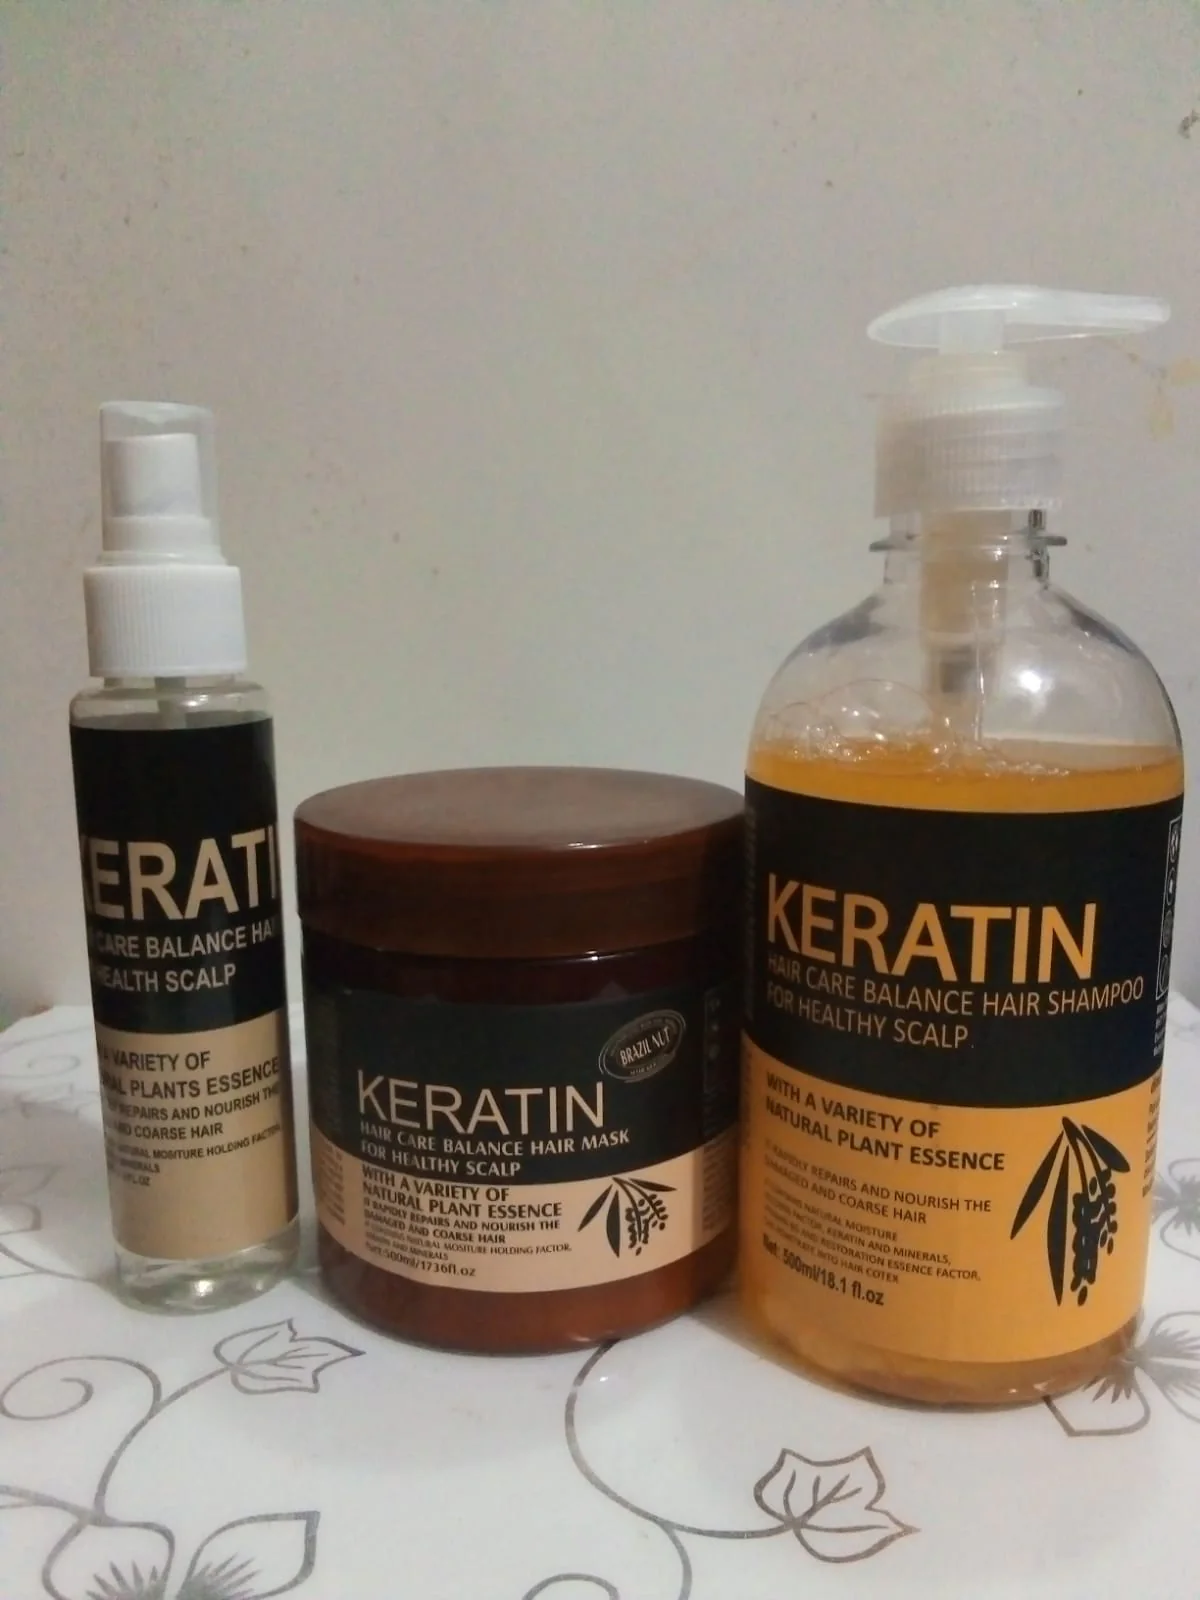 Keratin hair serums